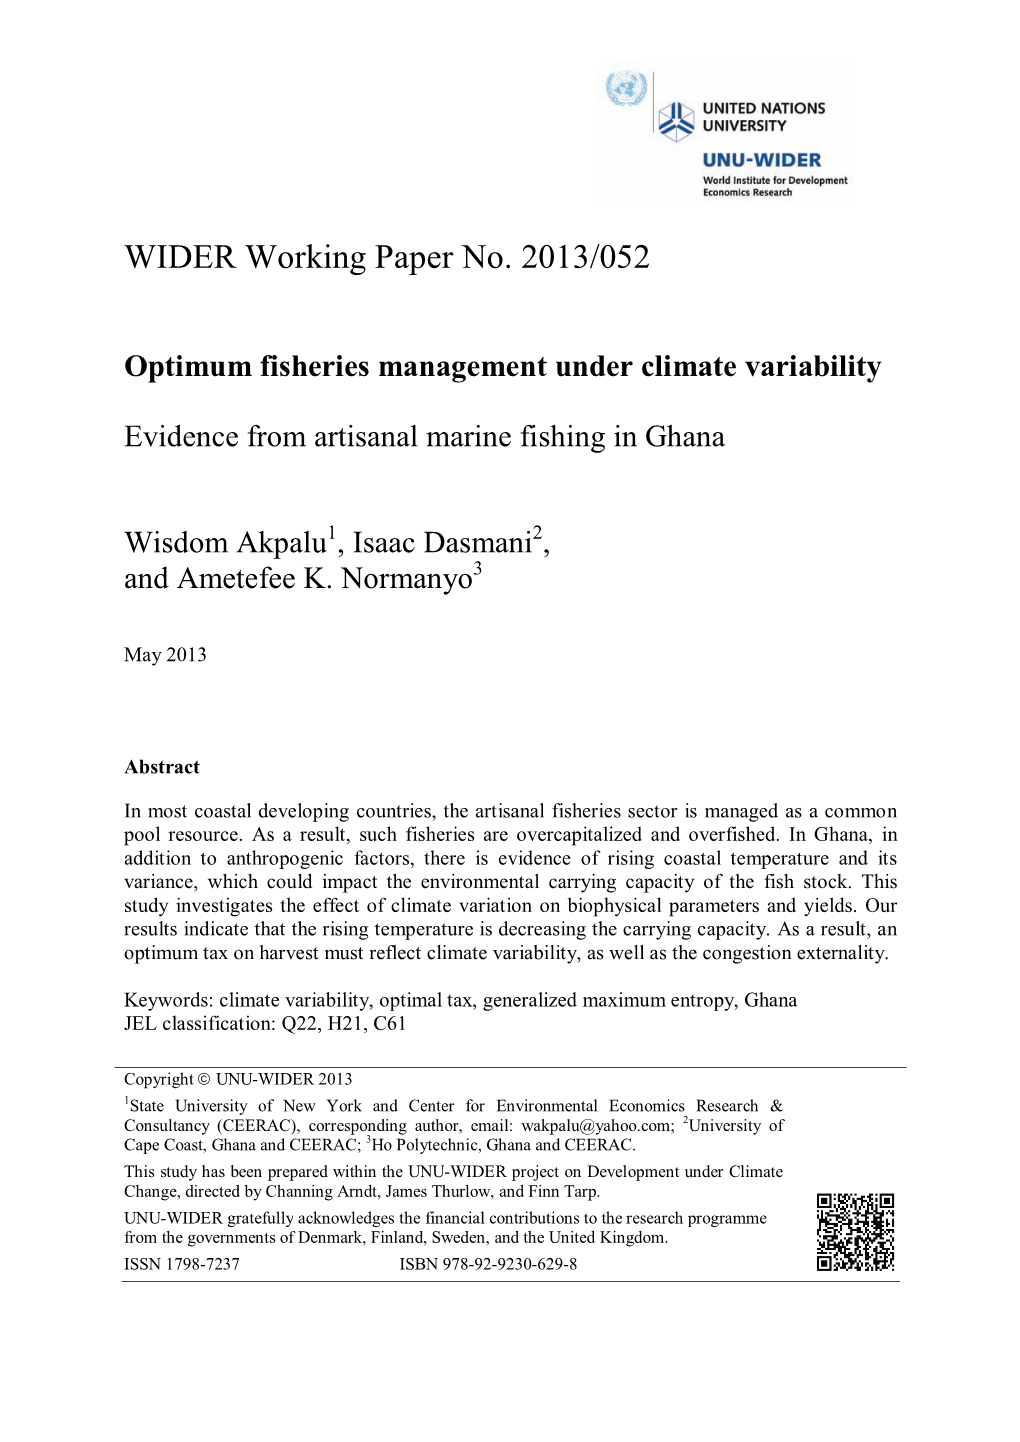 WIDER Working Paper No. 2013/052 Optimum Fisheries